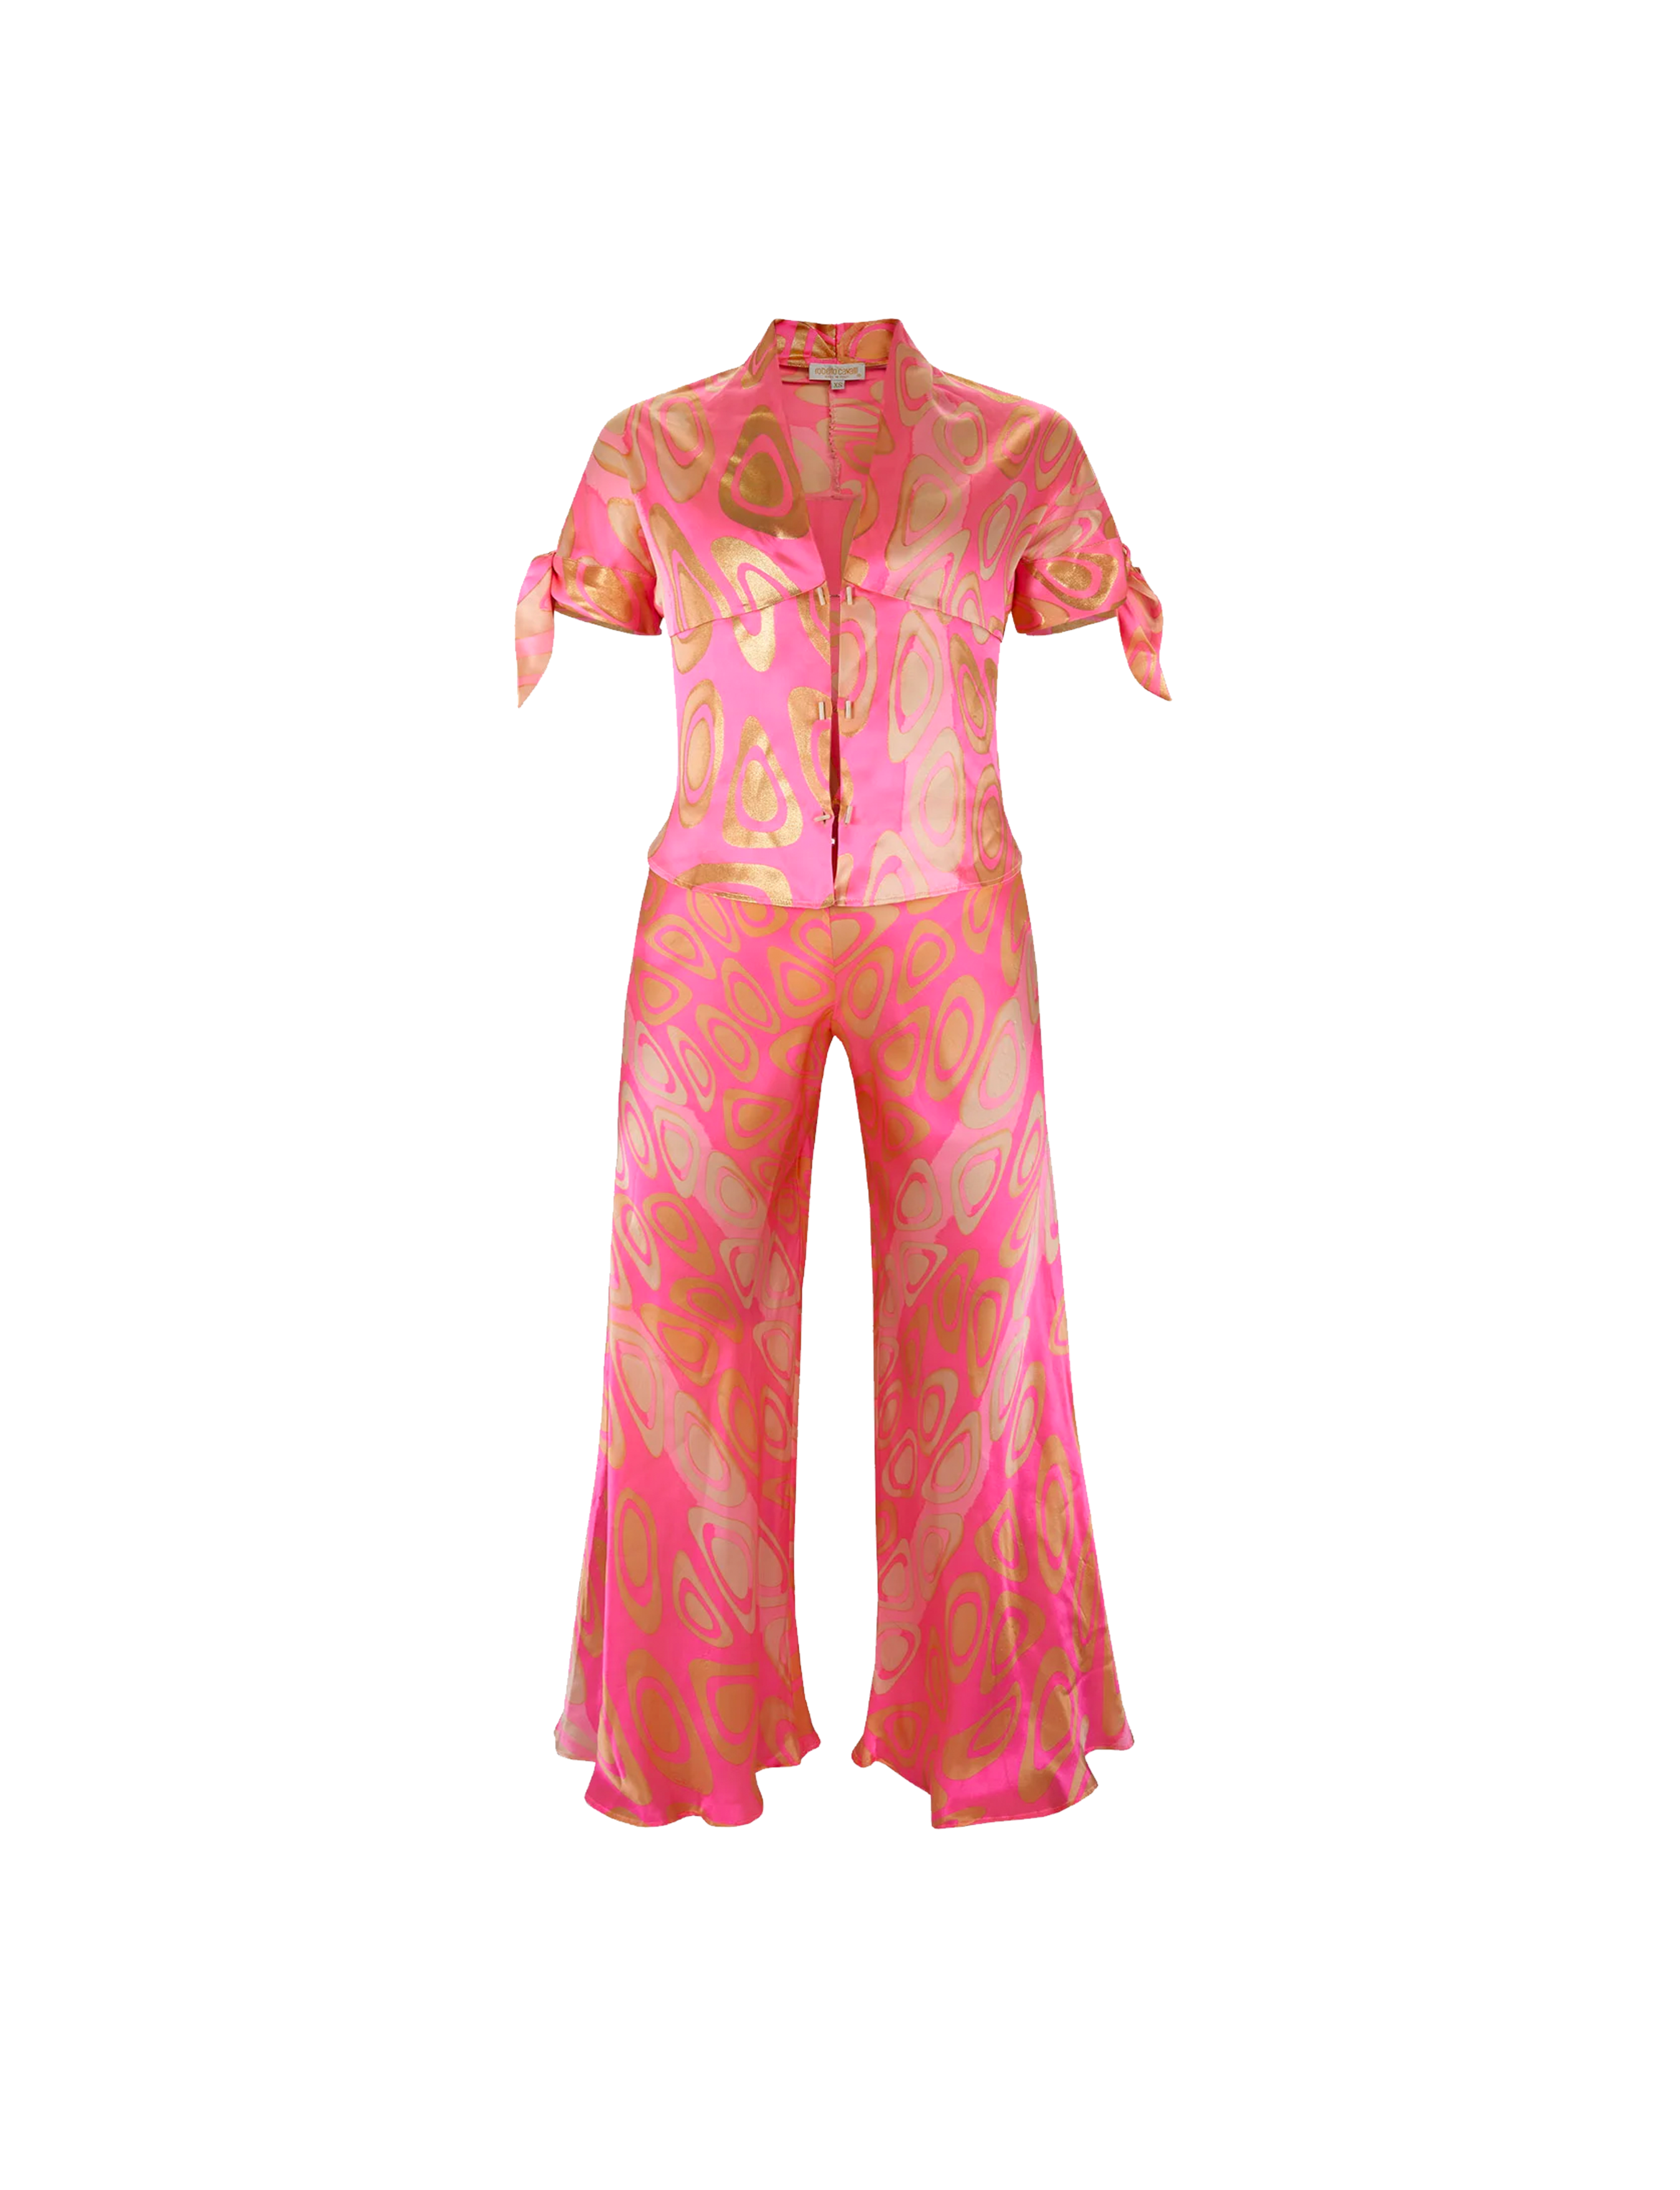 Roberto Cavalli Spring 2001 Pink and Gold Silk Set